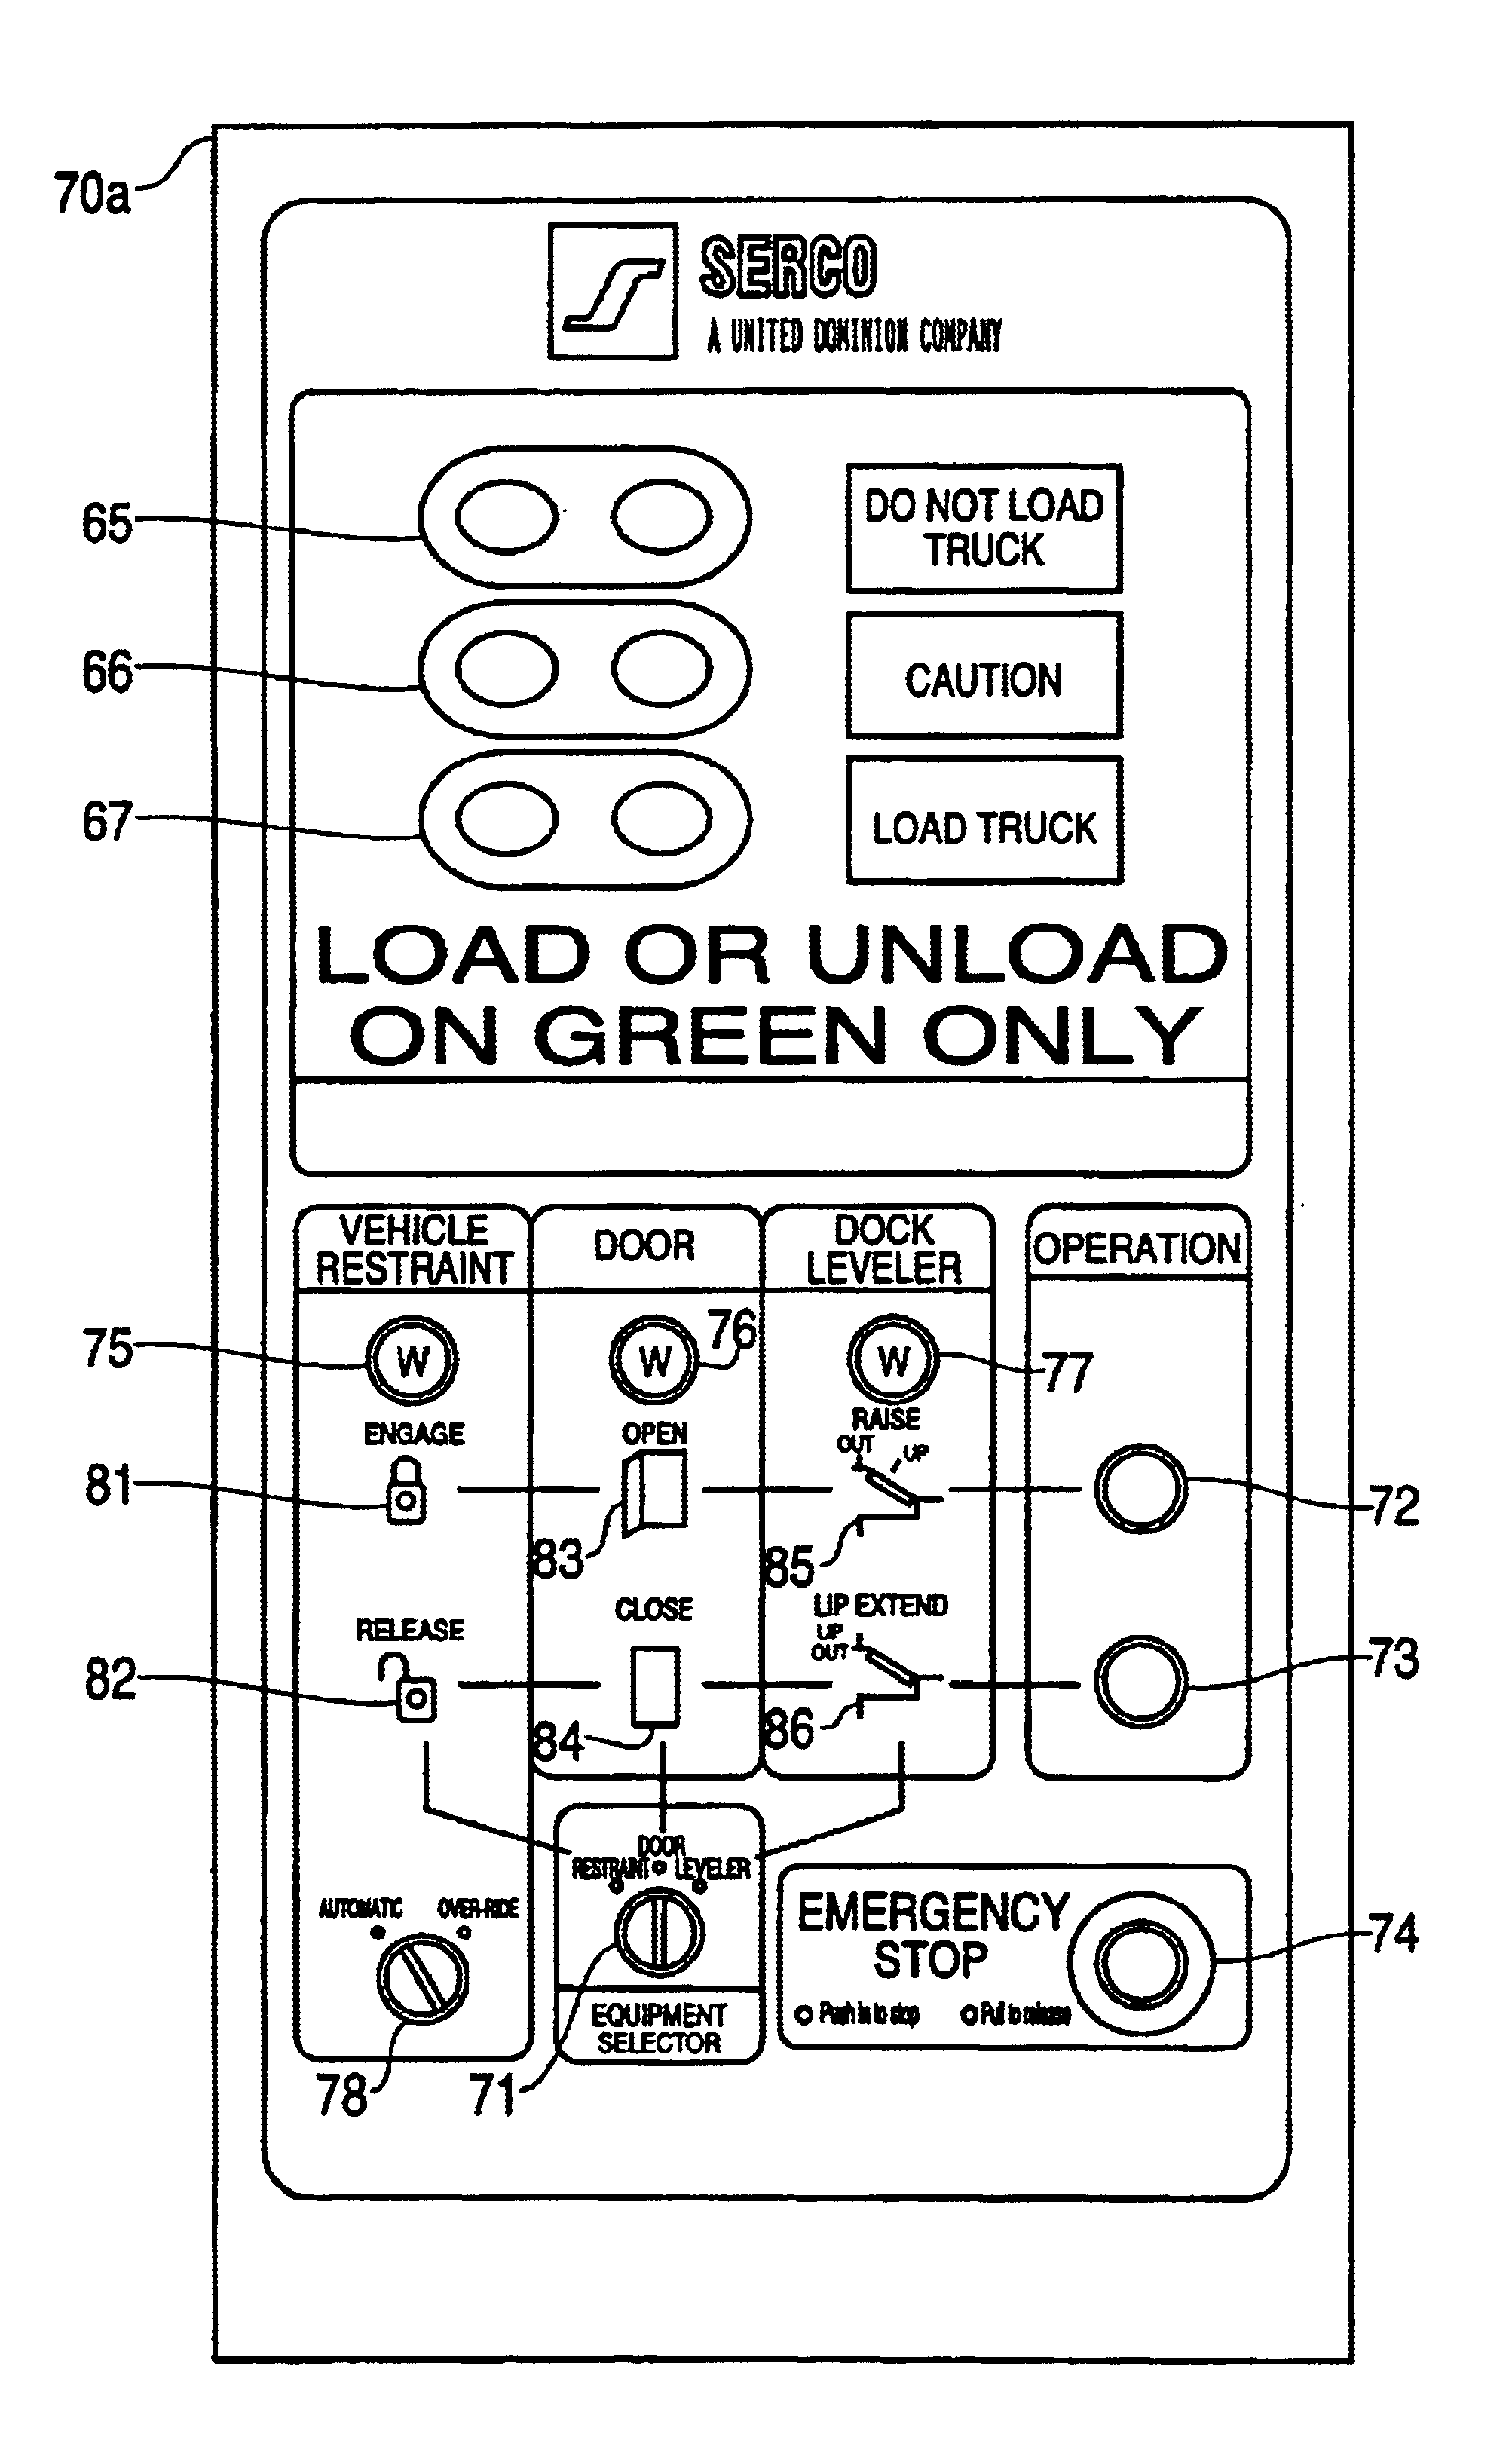 Master control panel for loading dock equipment